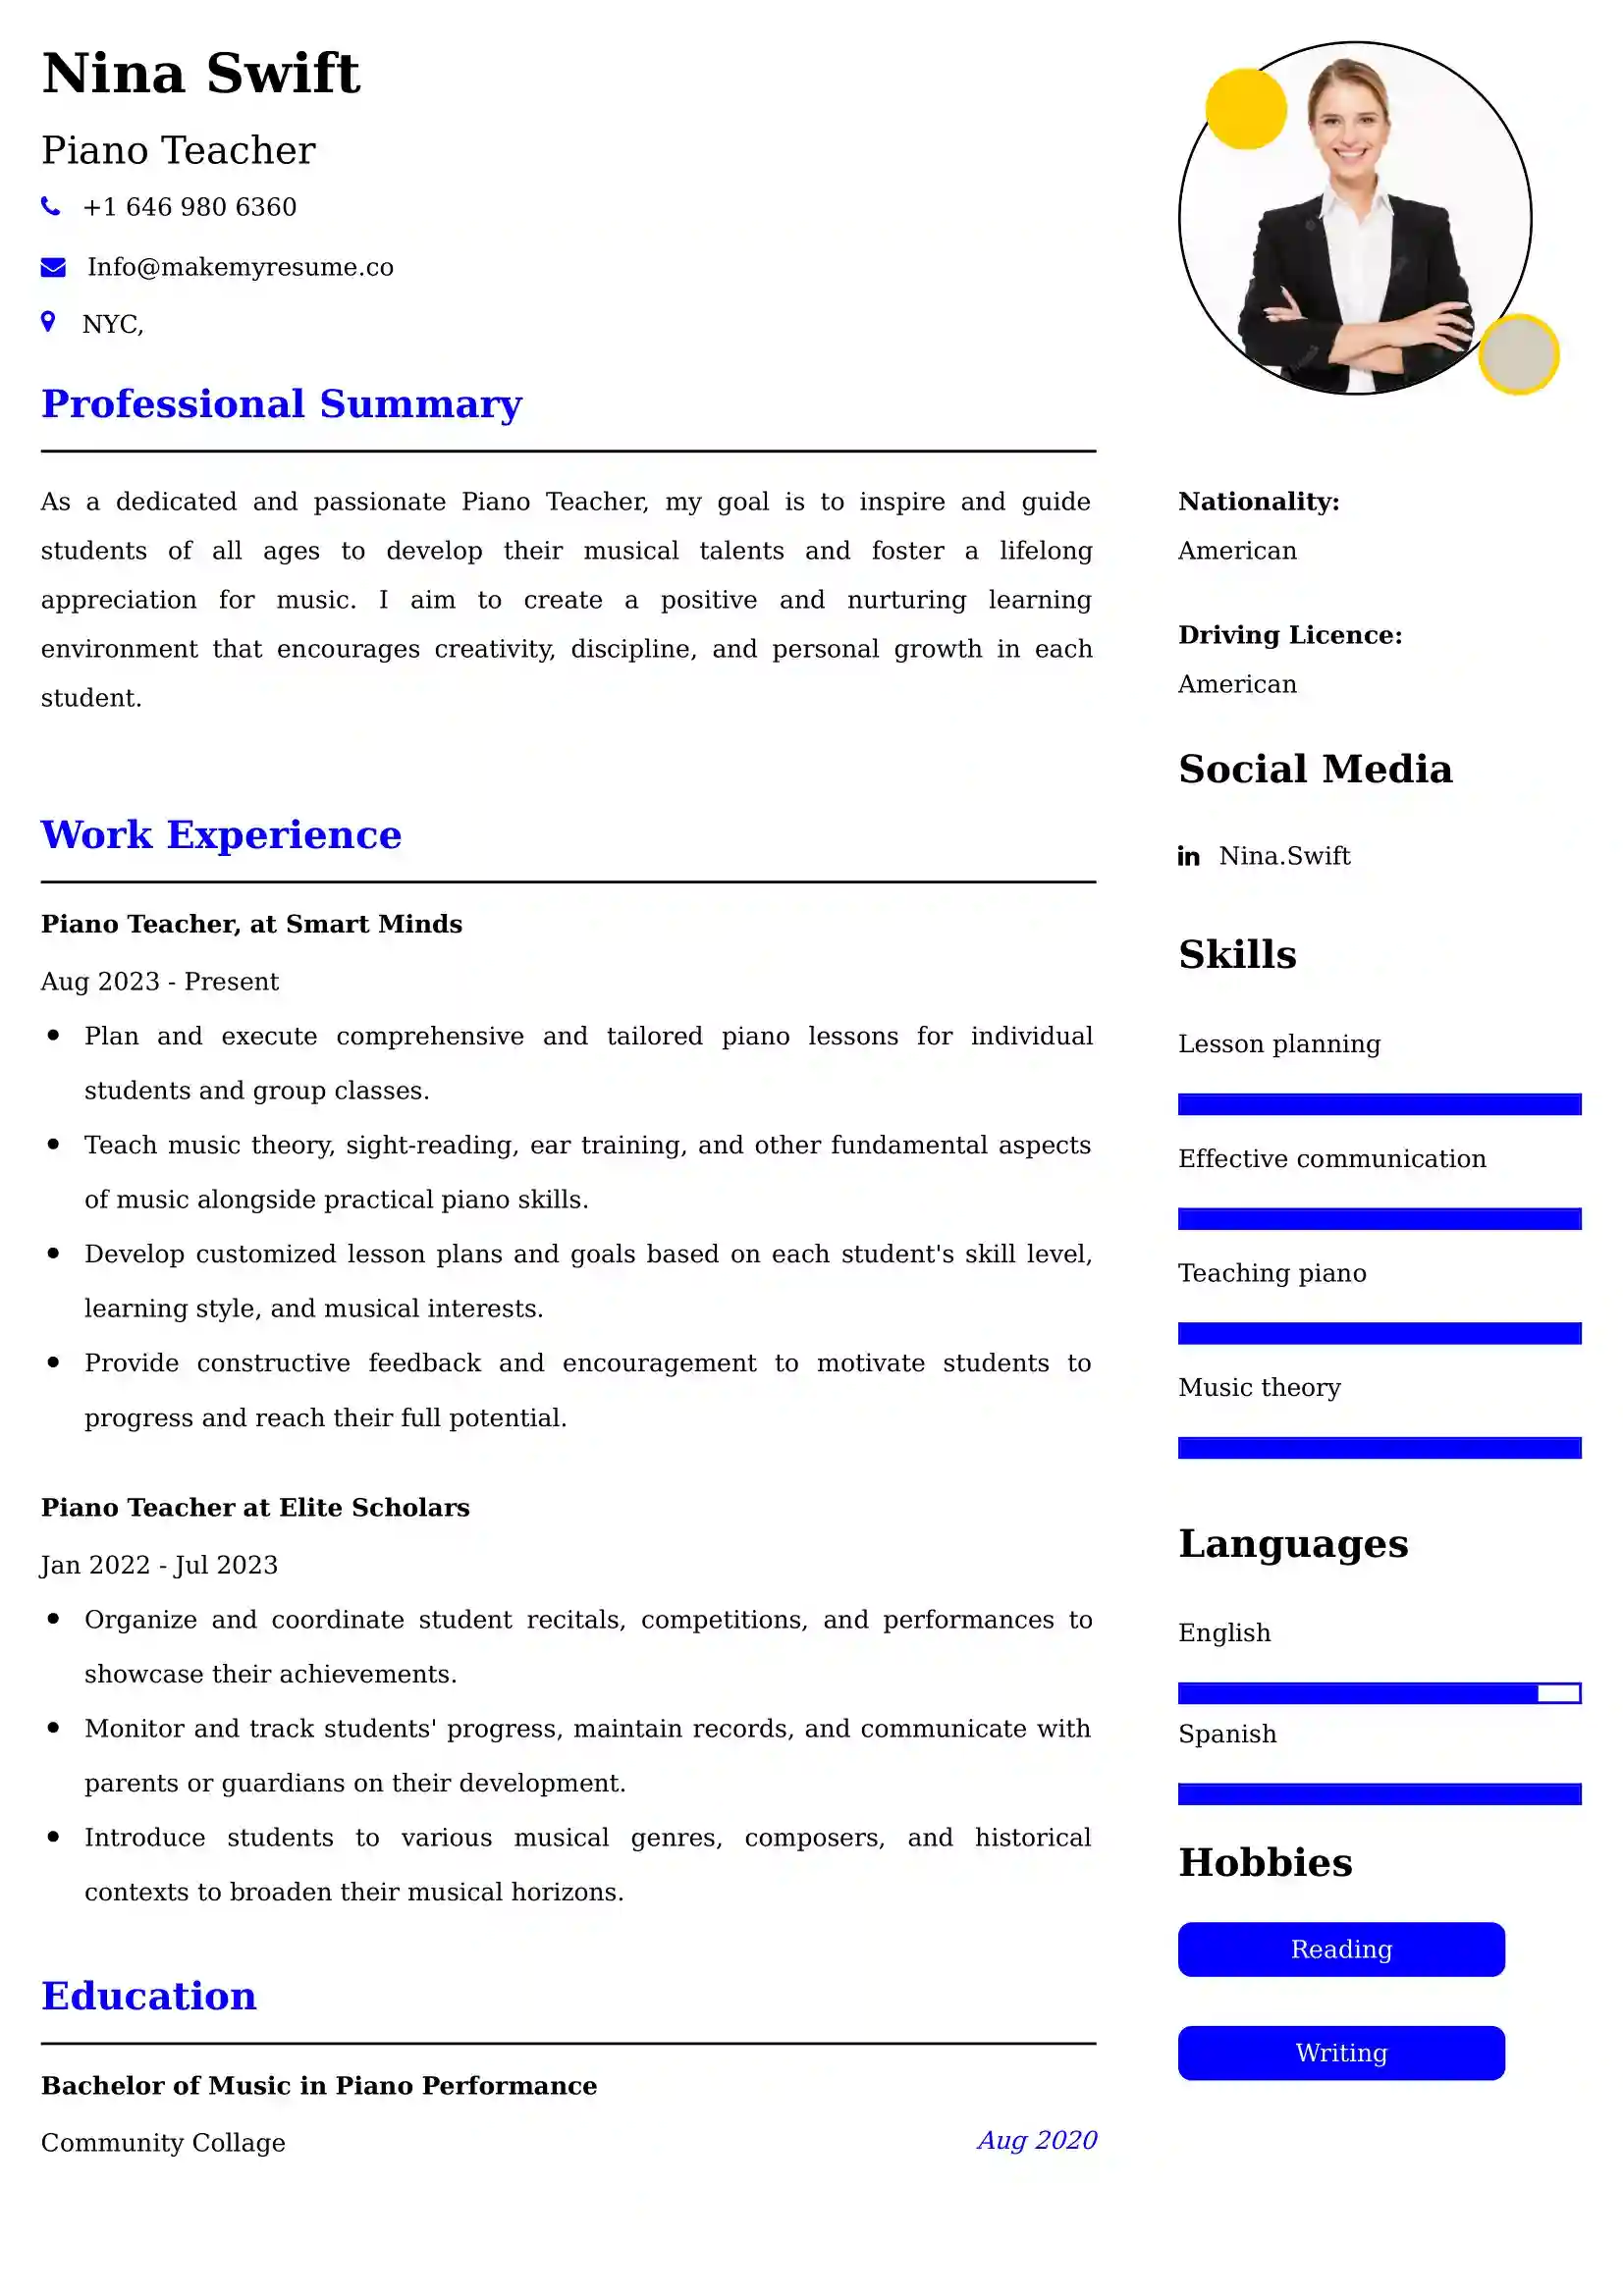 Language Professor CV Examples Malaysia